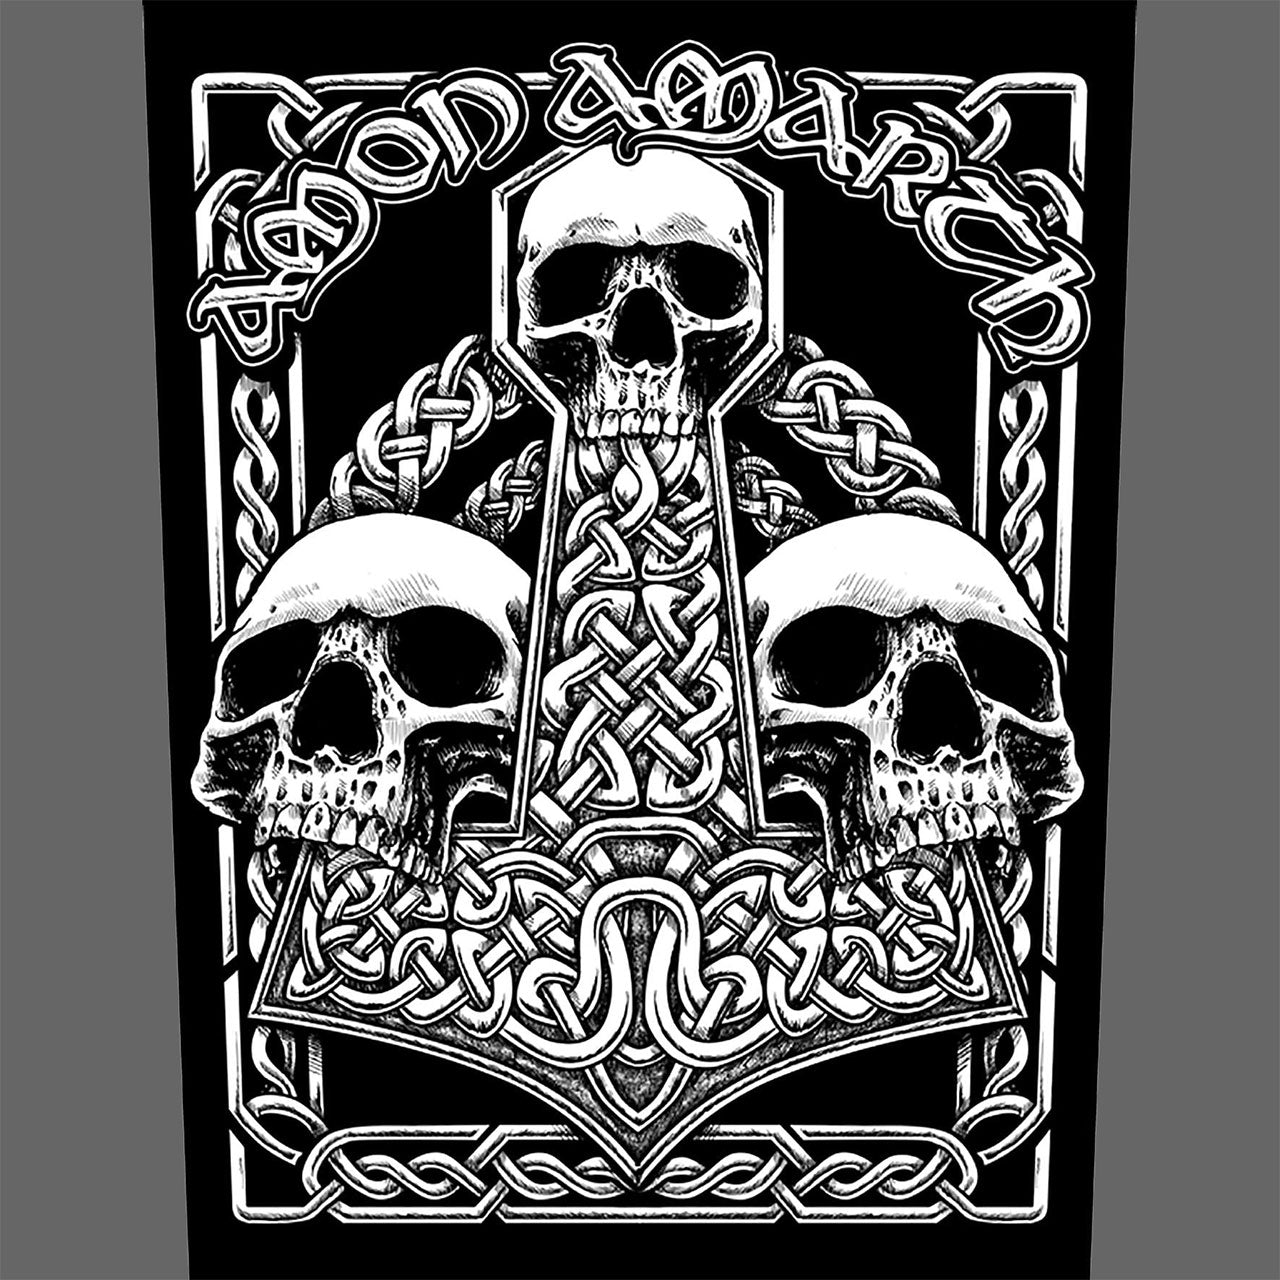 Amon Amarth - Three Skull Mjolnir (Backpatch)